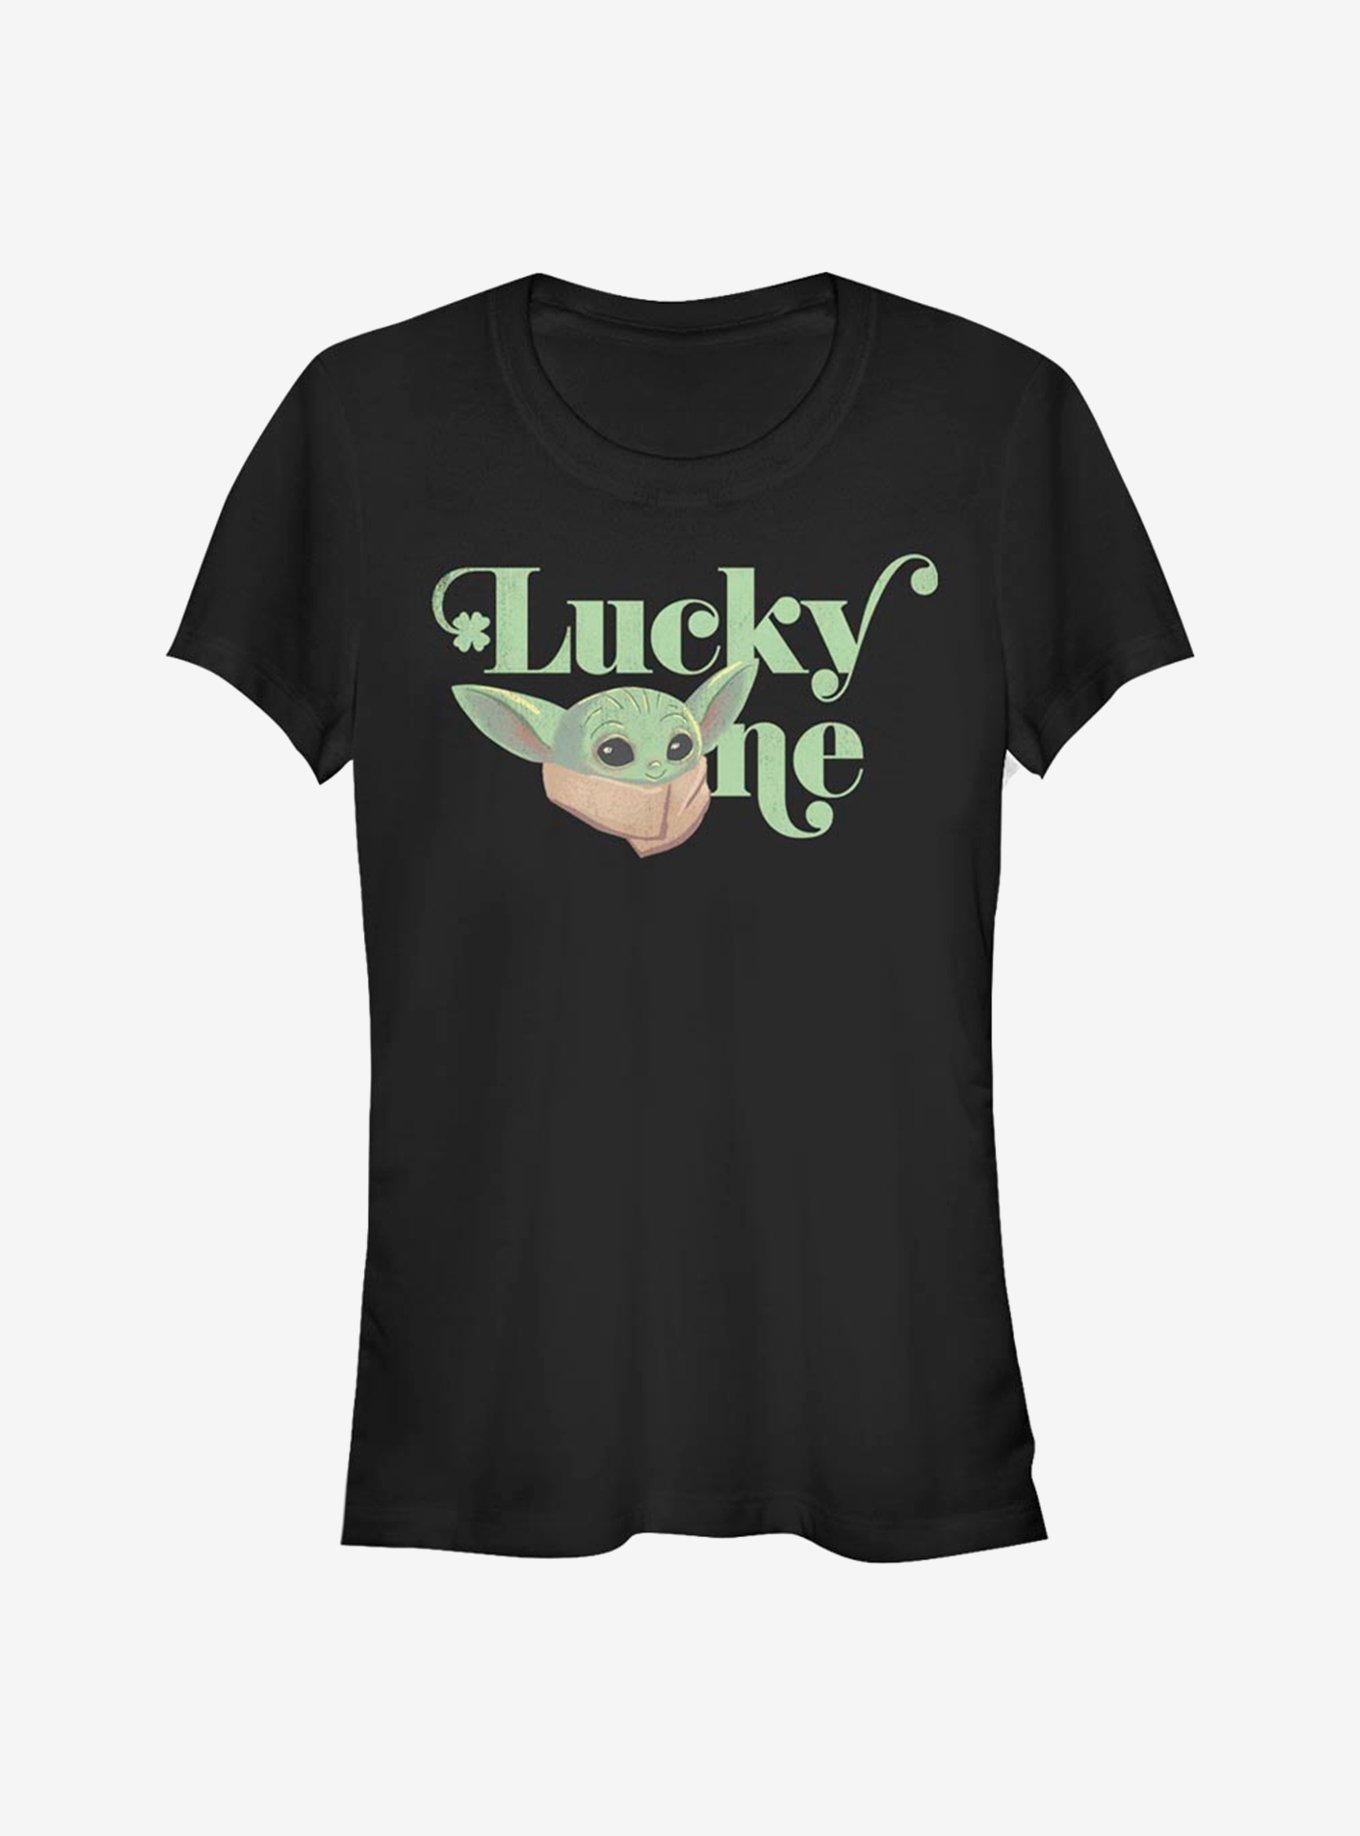 Star Wars The Mandalorian Lucky One The Child Girls T-Shirt, BLACK, hi-res